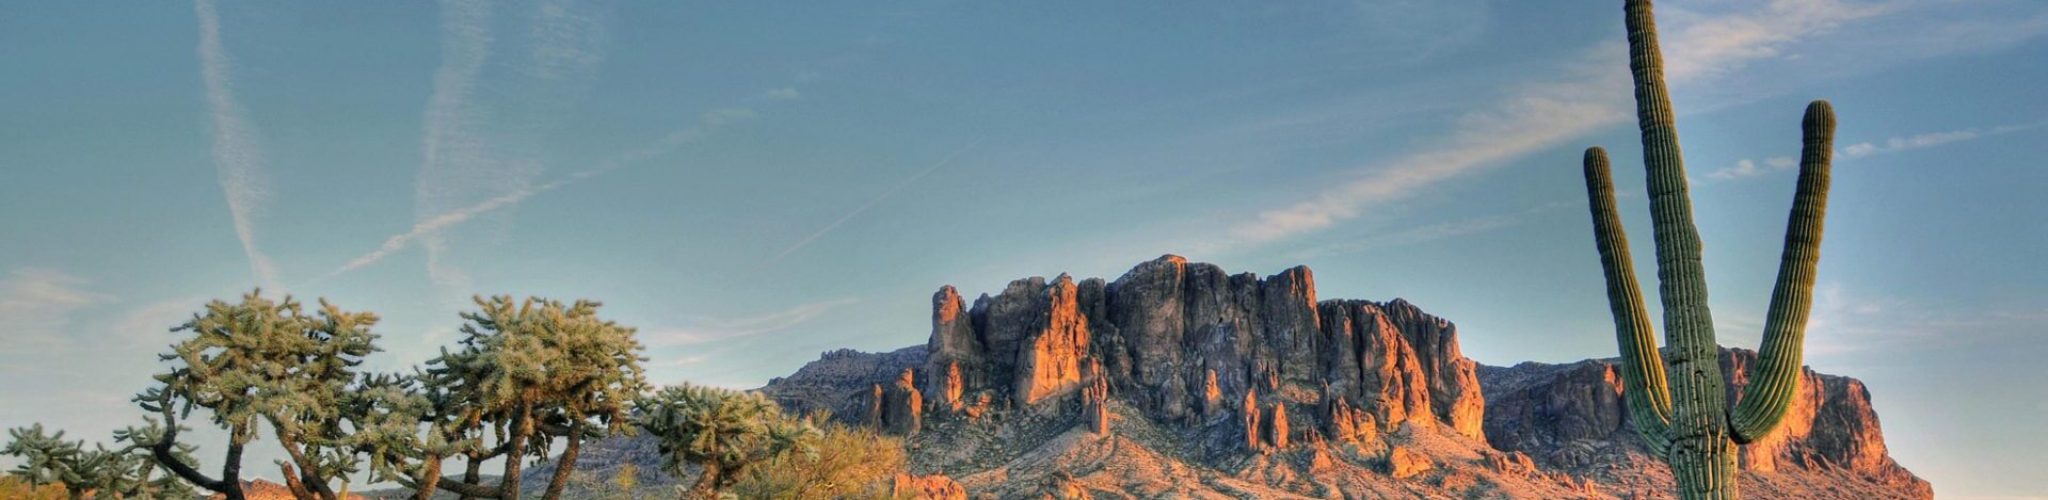 Superstition-Mountains-Mountain-Range-in-Field-Phoenix-Arizona-USA-Landscape-Desert-Landscapes-Download-all-4k-wallpaper-images-for-your-desktop-background-1920x1080-1